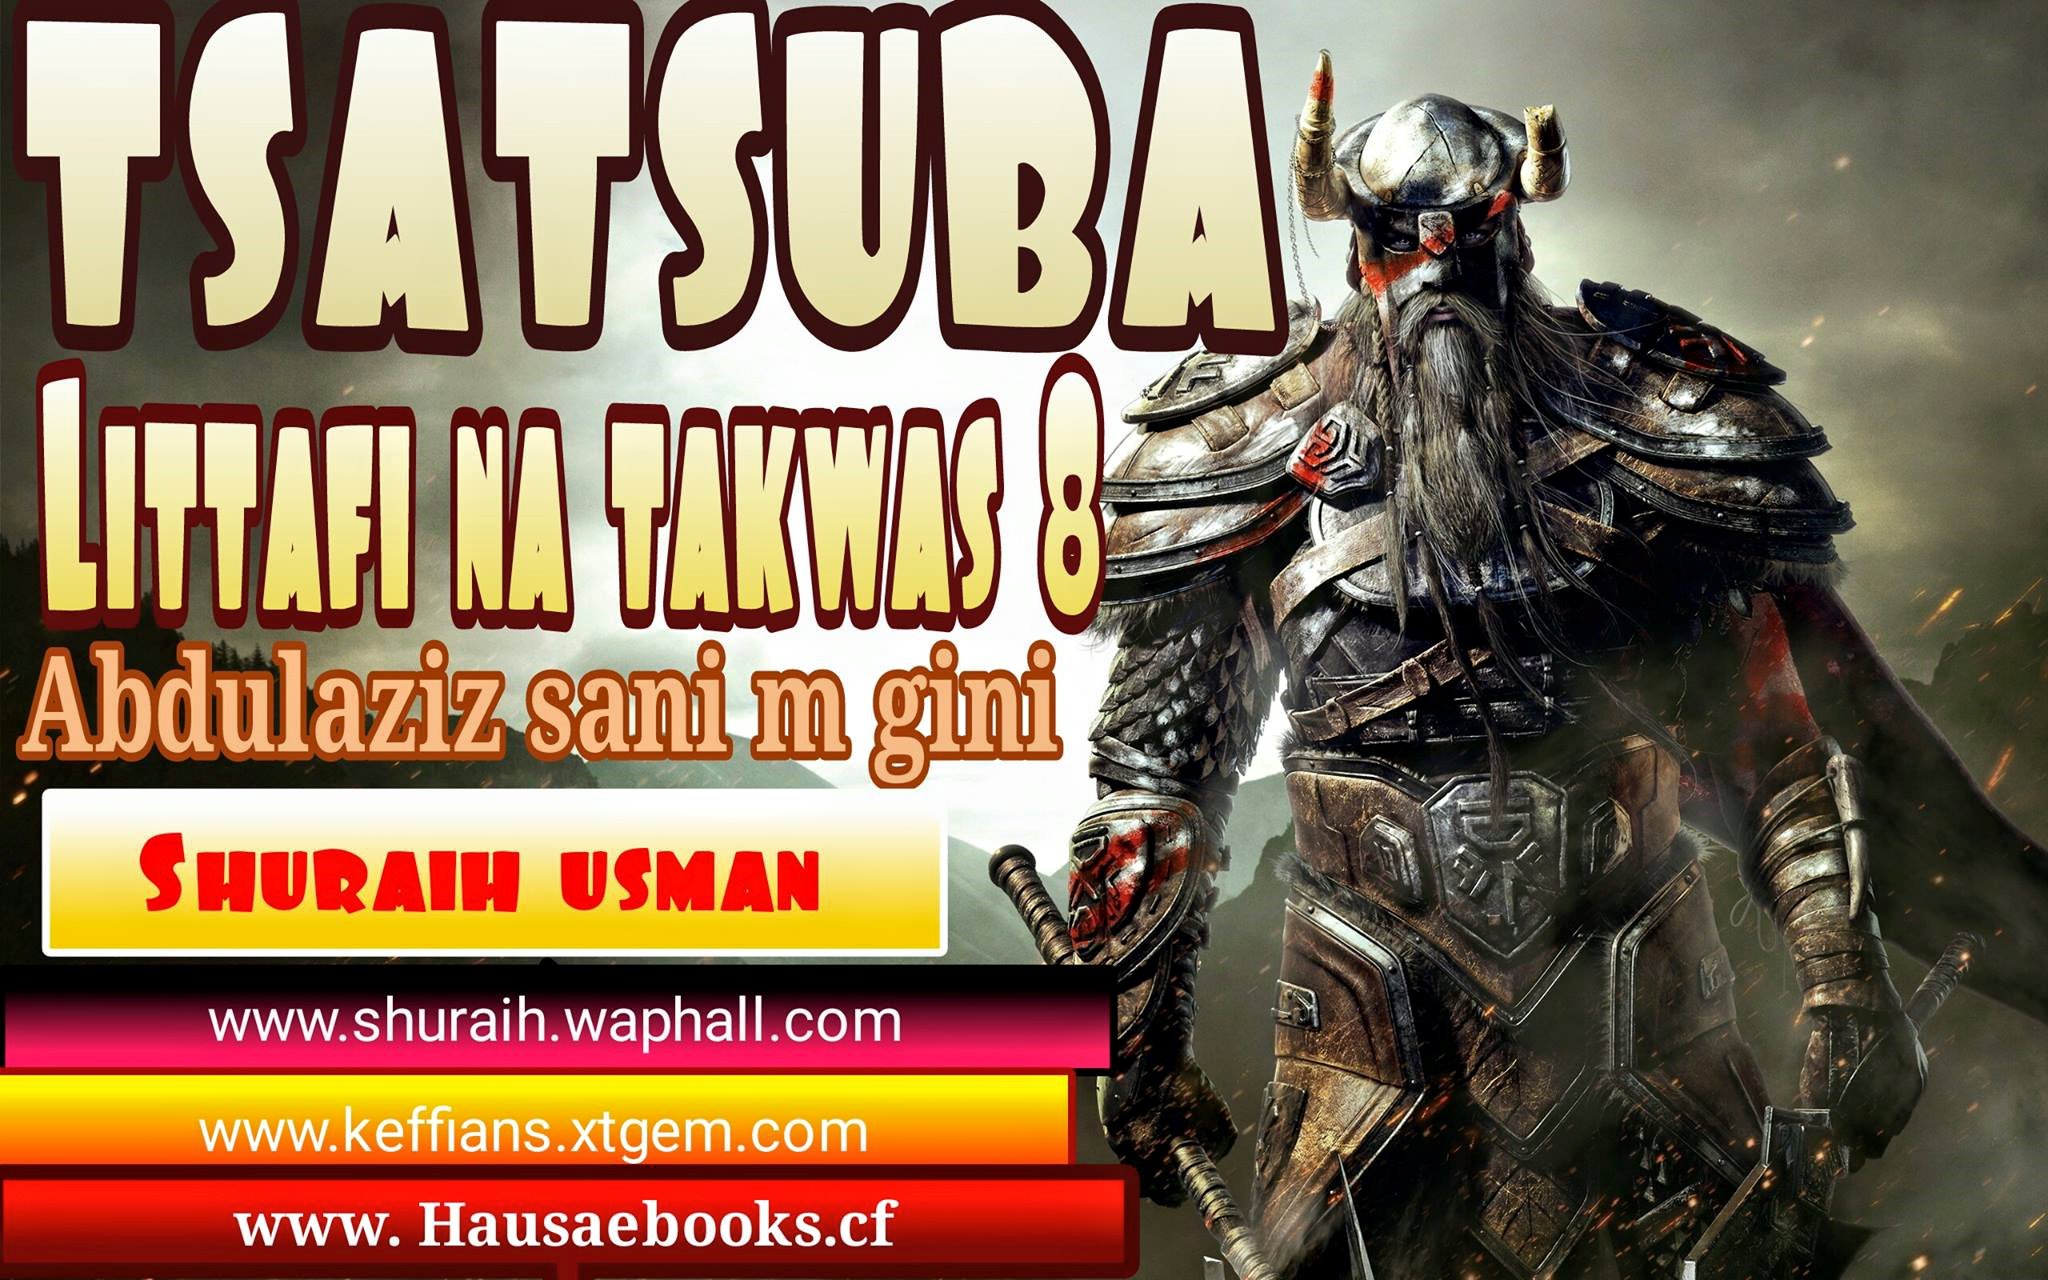 hausaebooks:- TSATSUBA littafi na takwas 8 Abdulaziz sani m gini